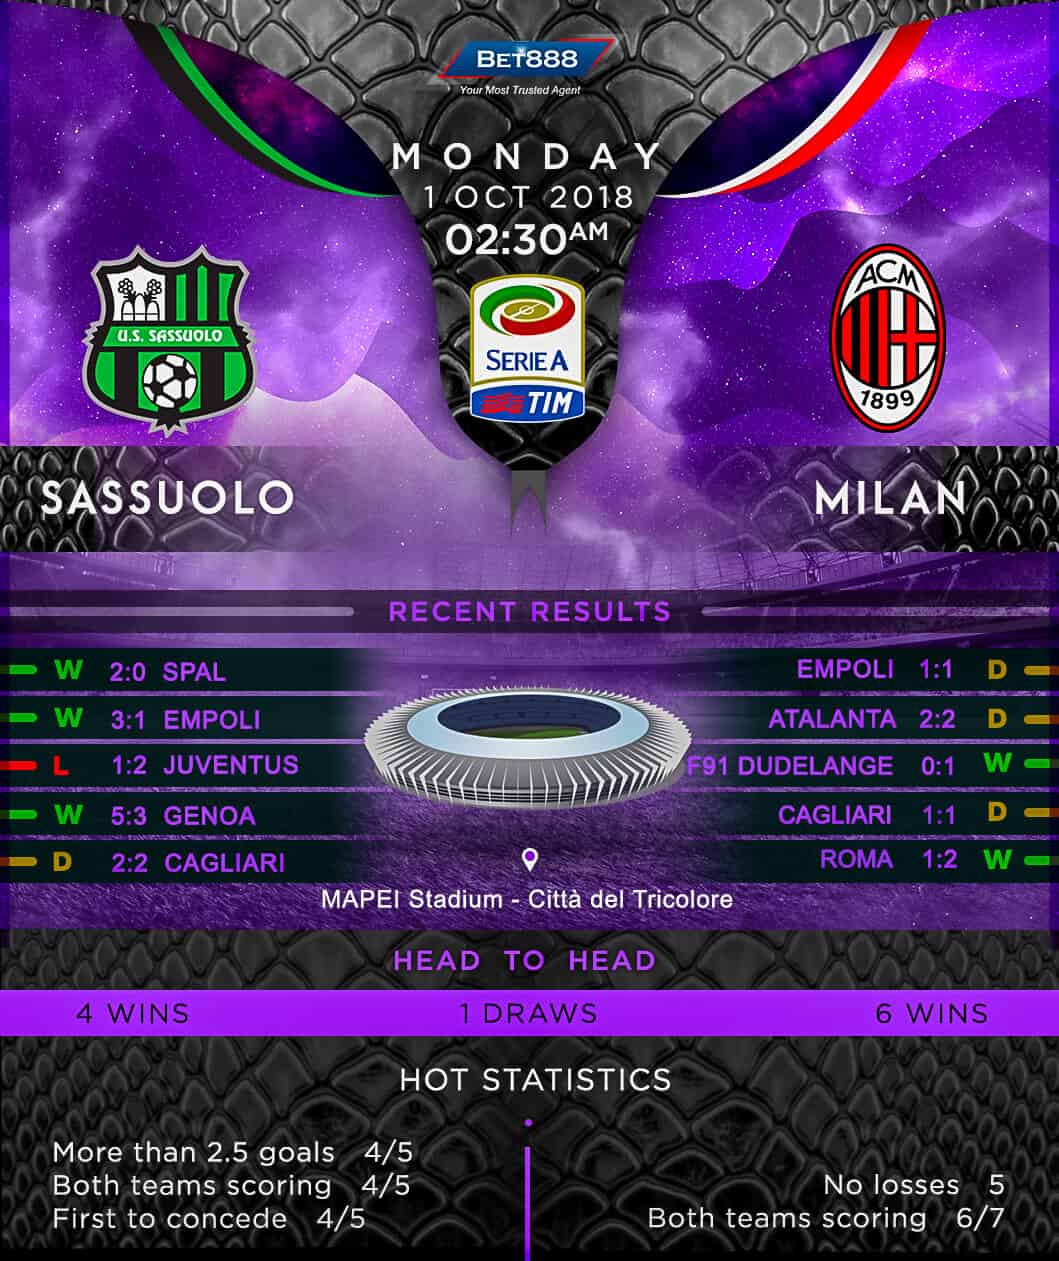 Sassuolo vs AC Milan 01/10/18